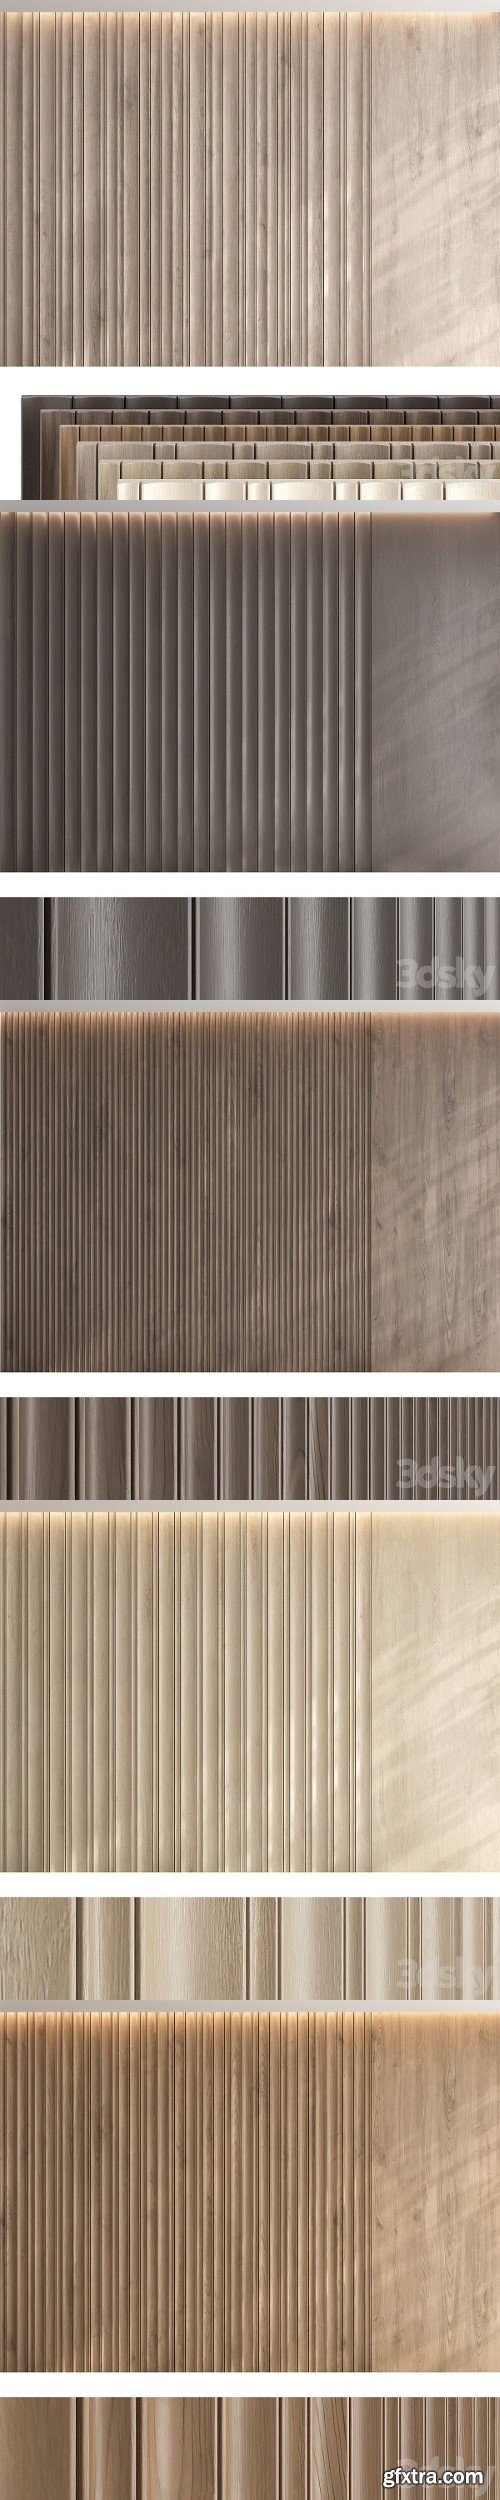 Wood Panel Set V 07